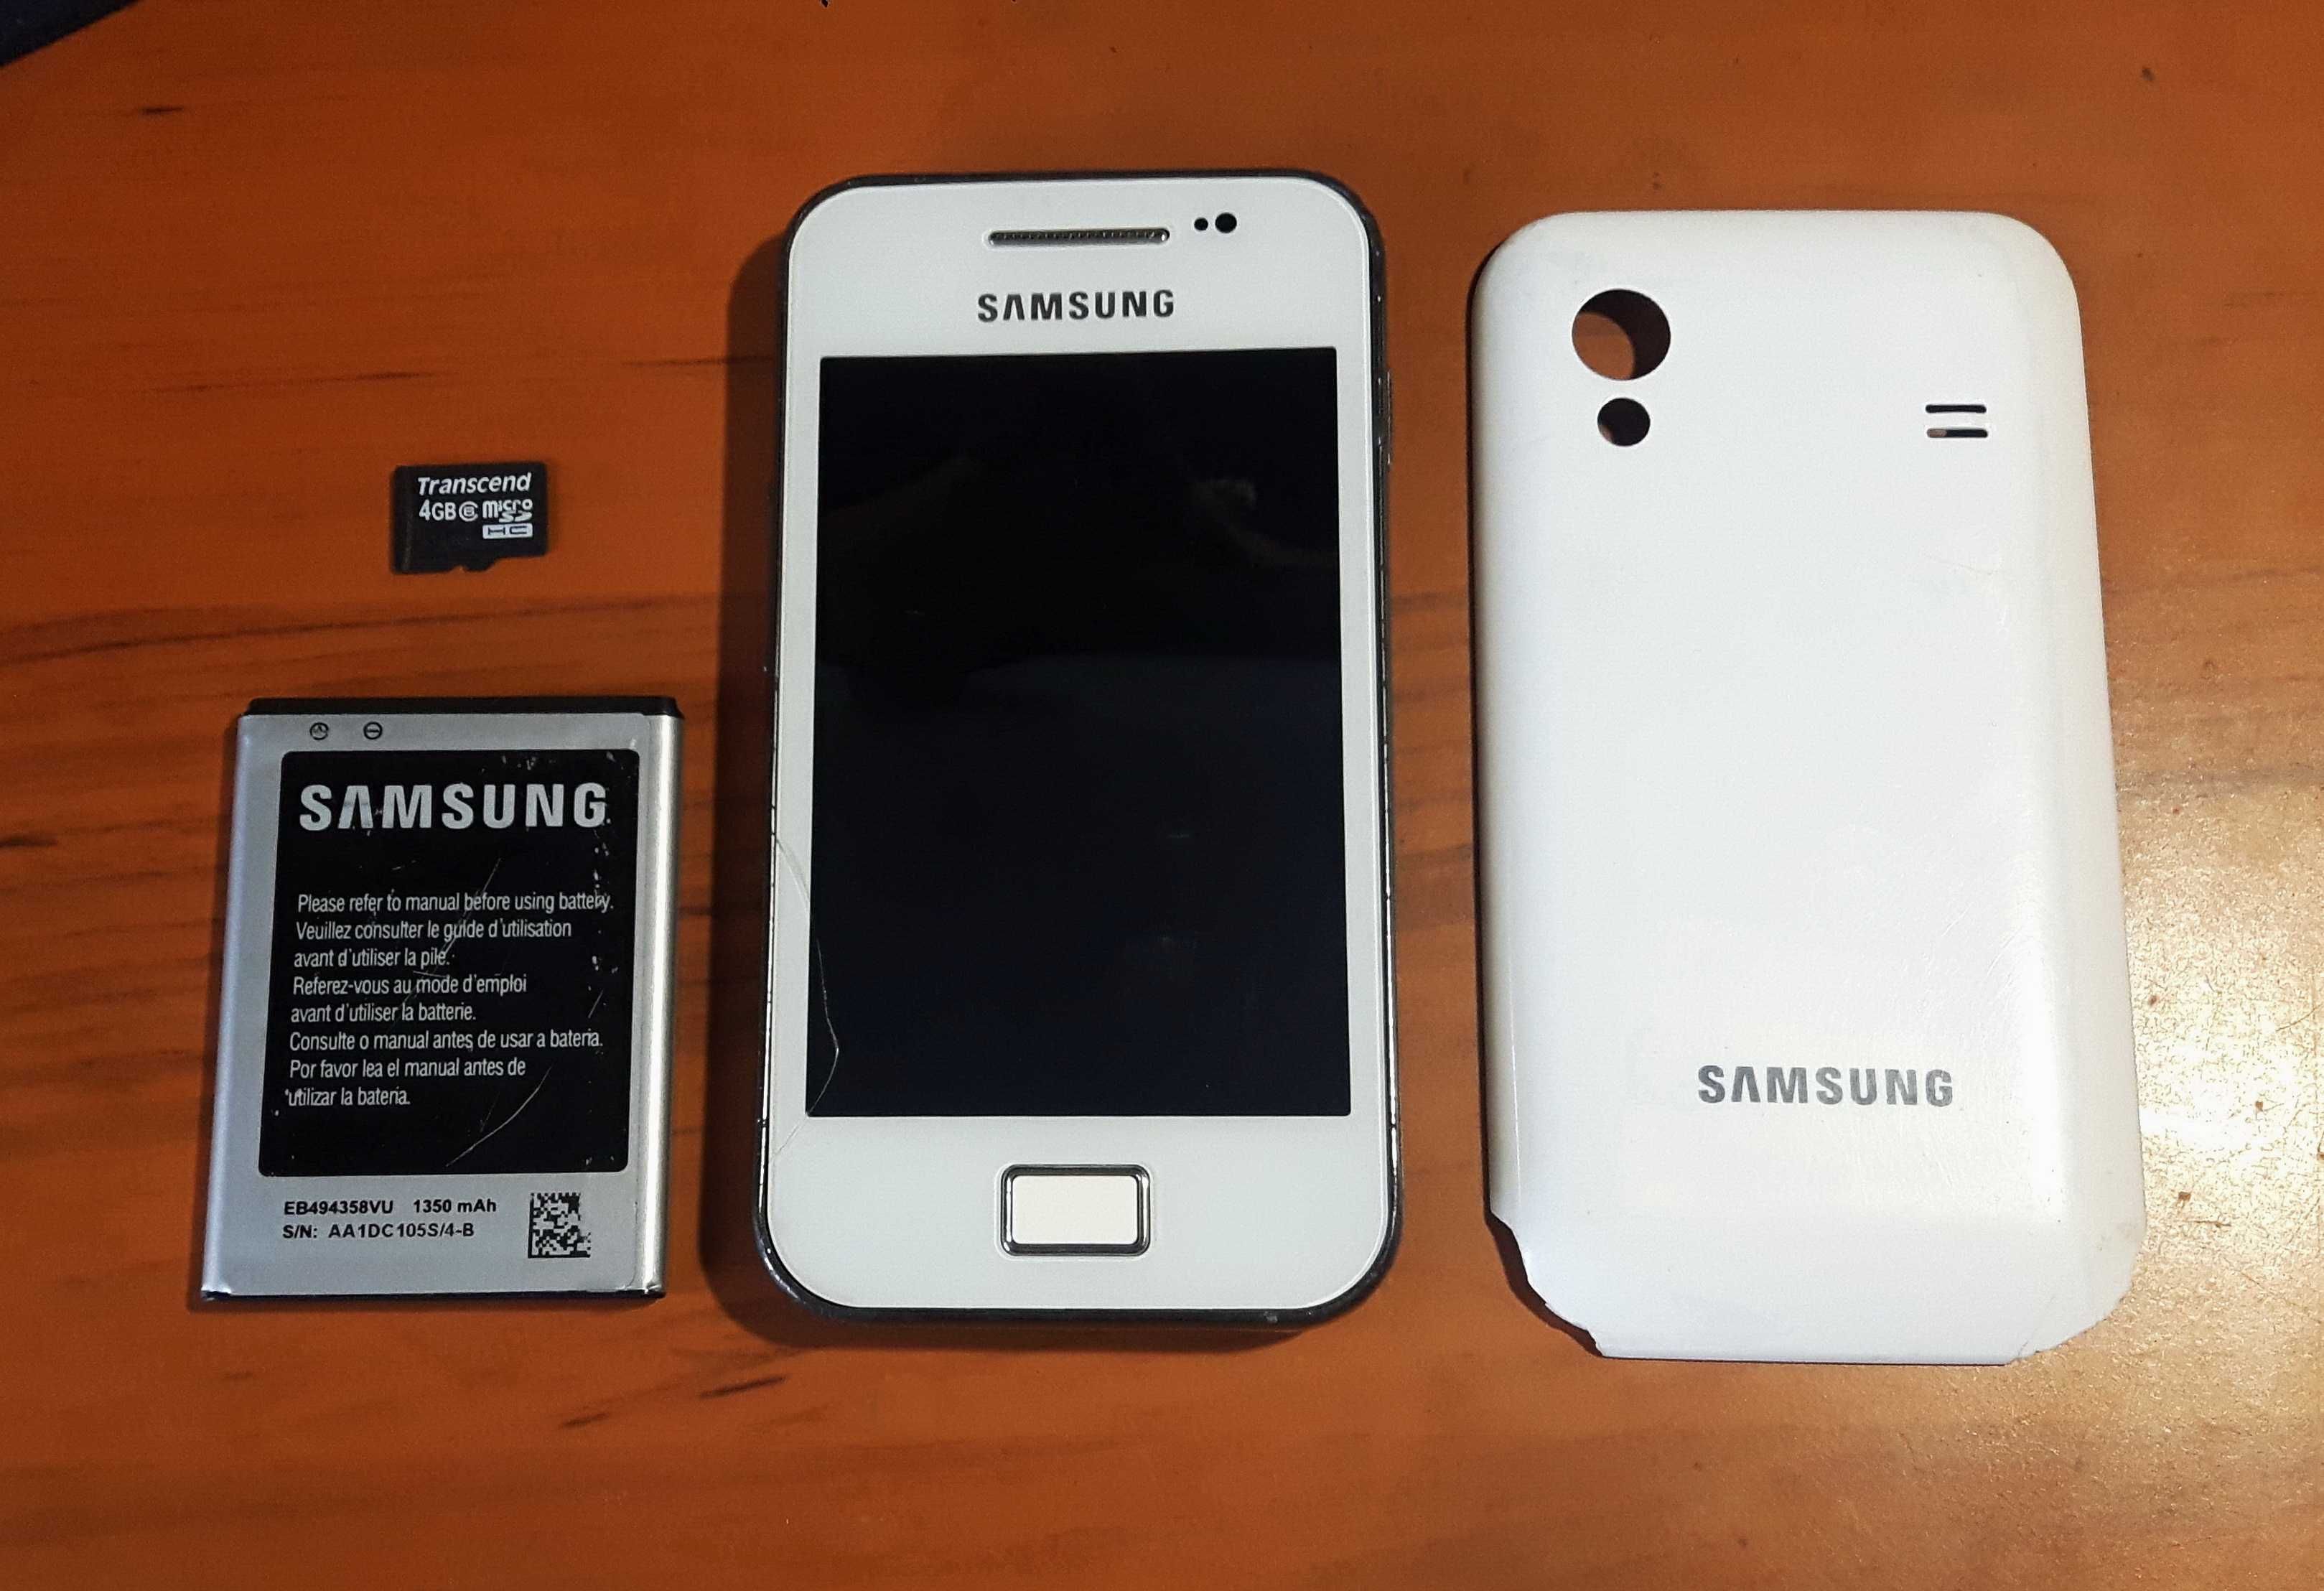 Смартфон Samsung Galaxy Ace S5830i + карта памяти MicroSD 4Гб